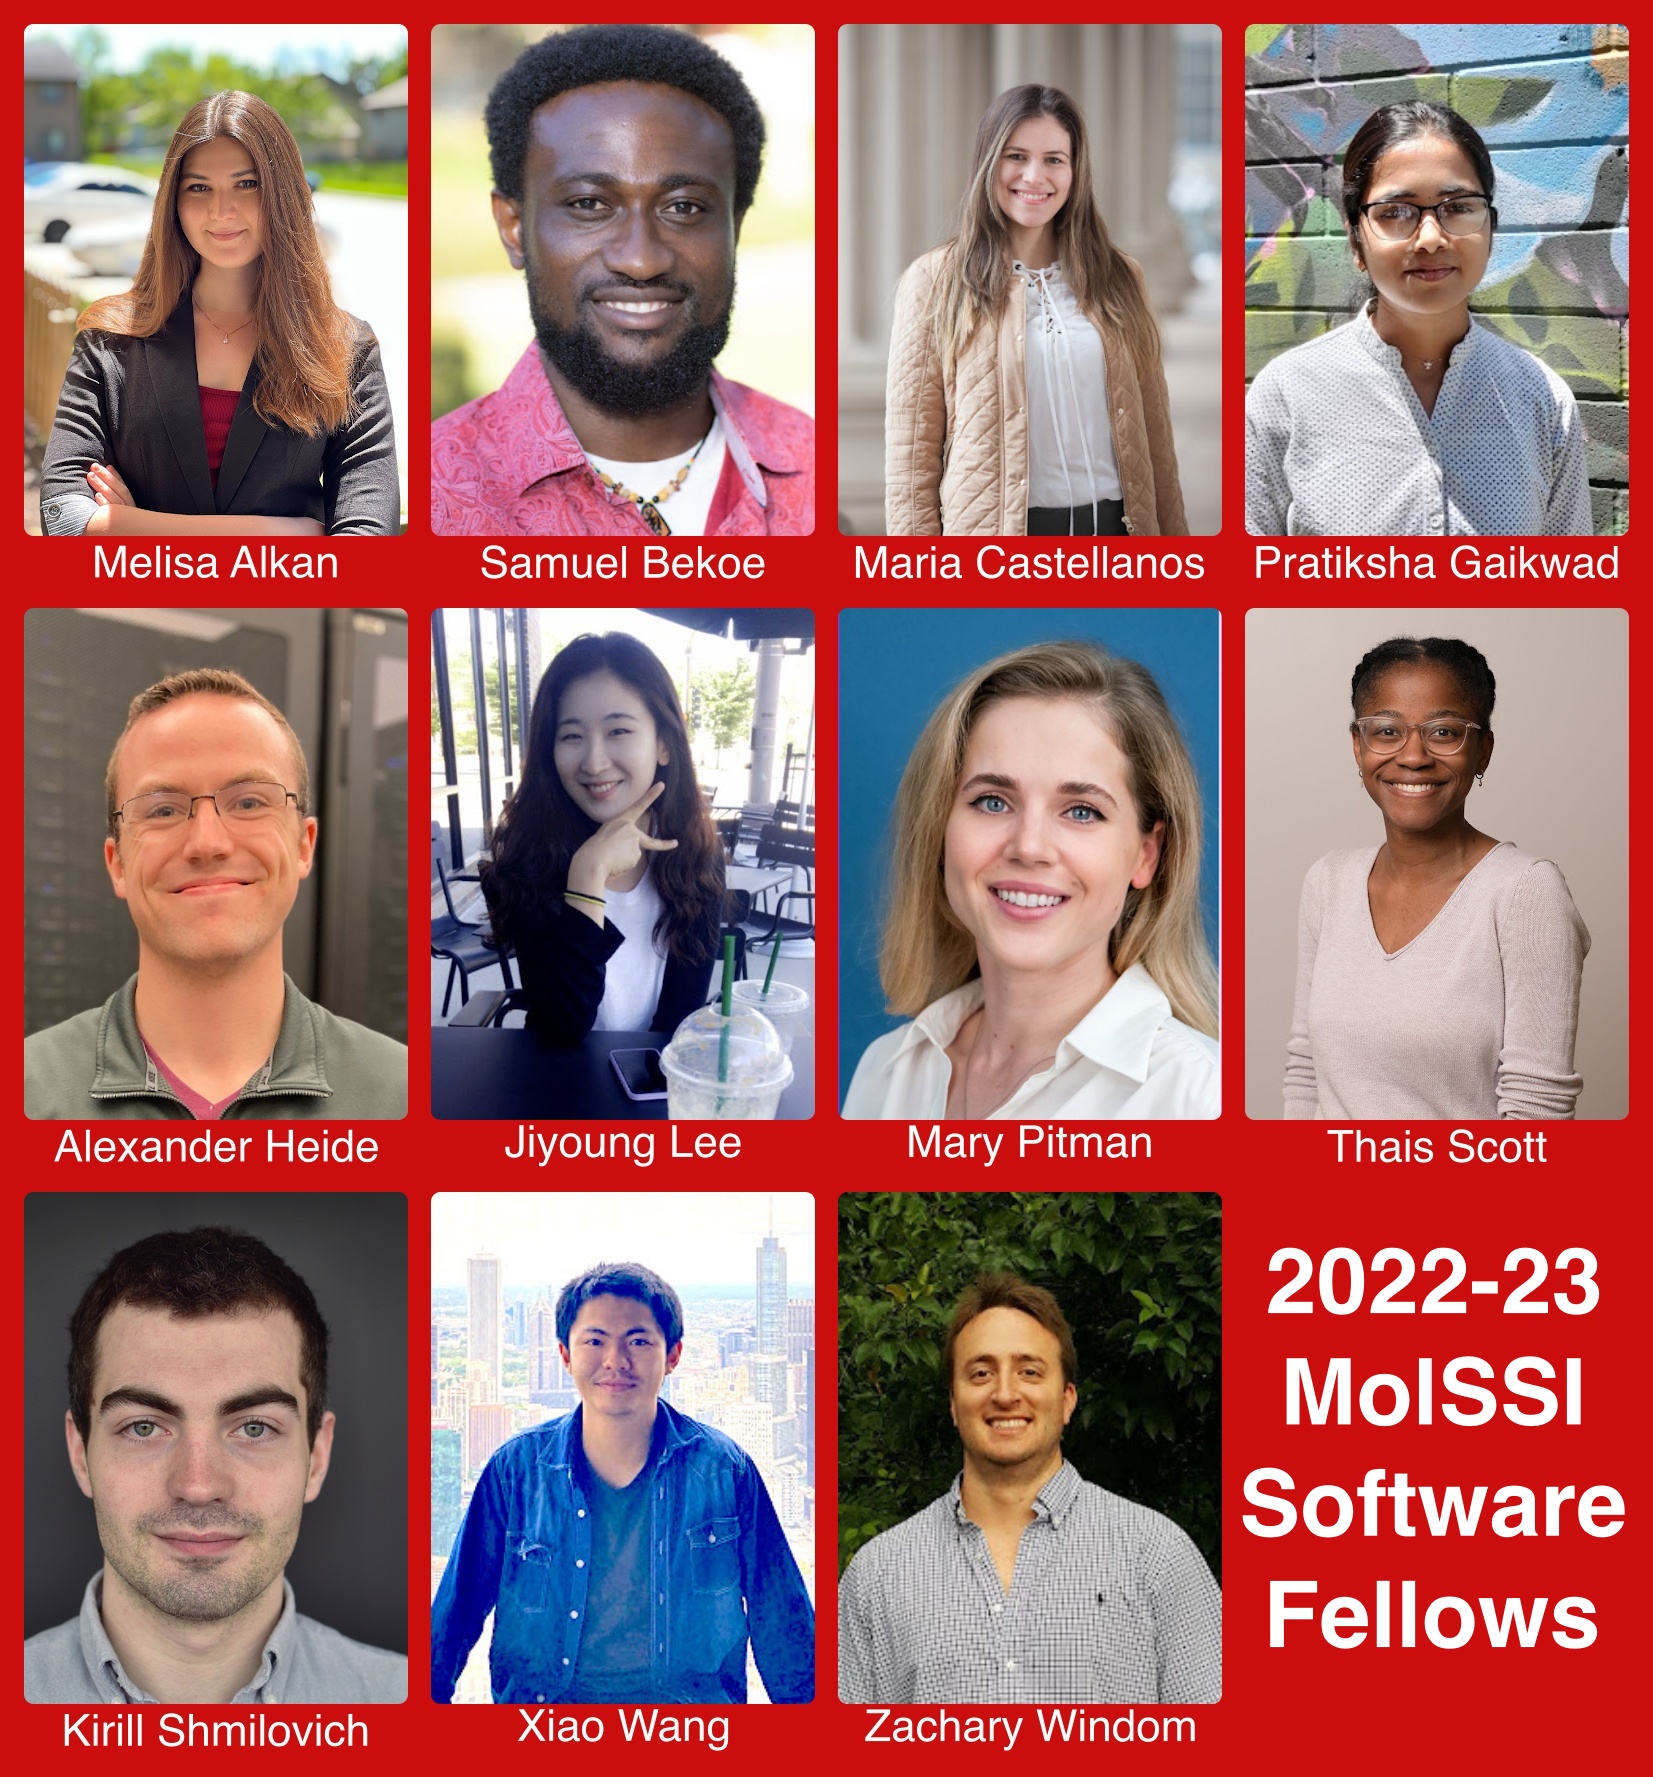 Introducing MolSSI’s 2022-23 Software Fellows!